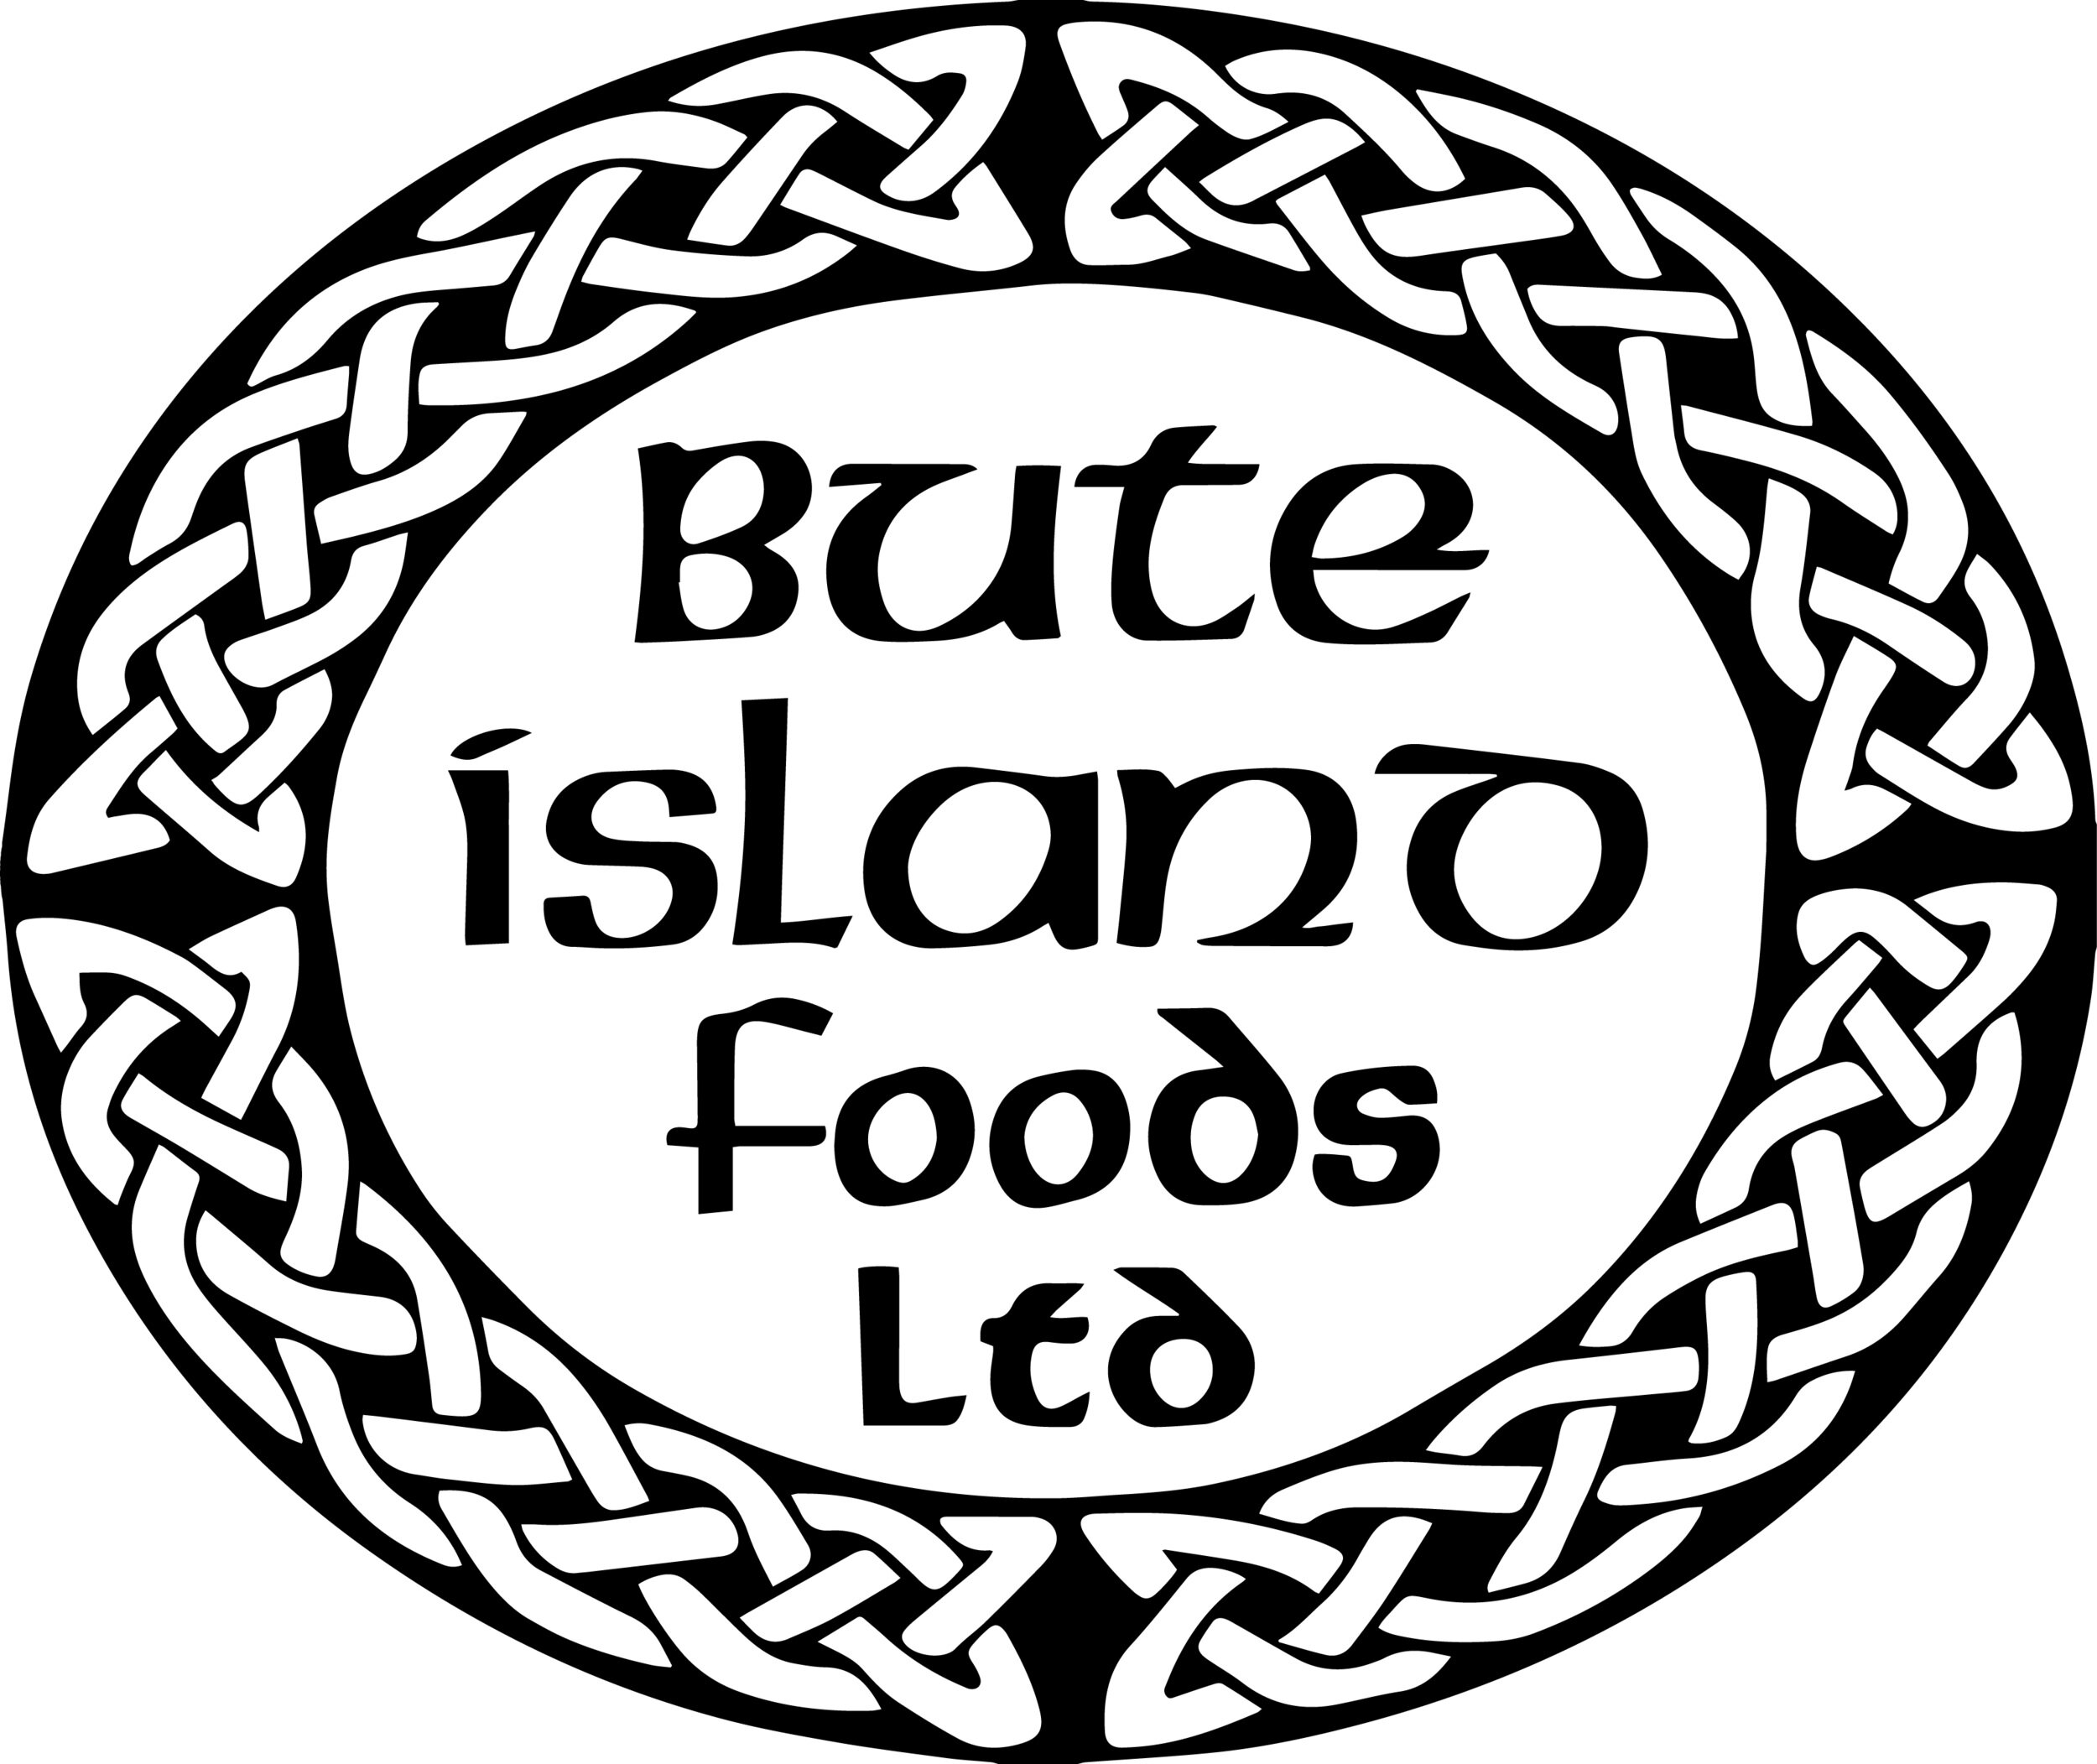 300dpi_Bute+Island+Foods+logo.jpg